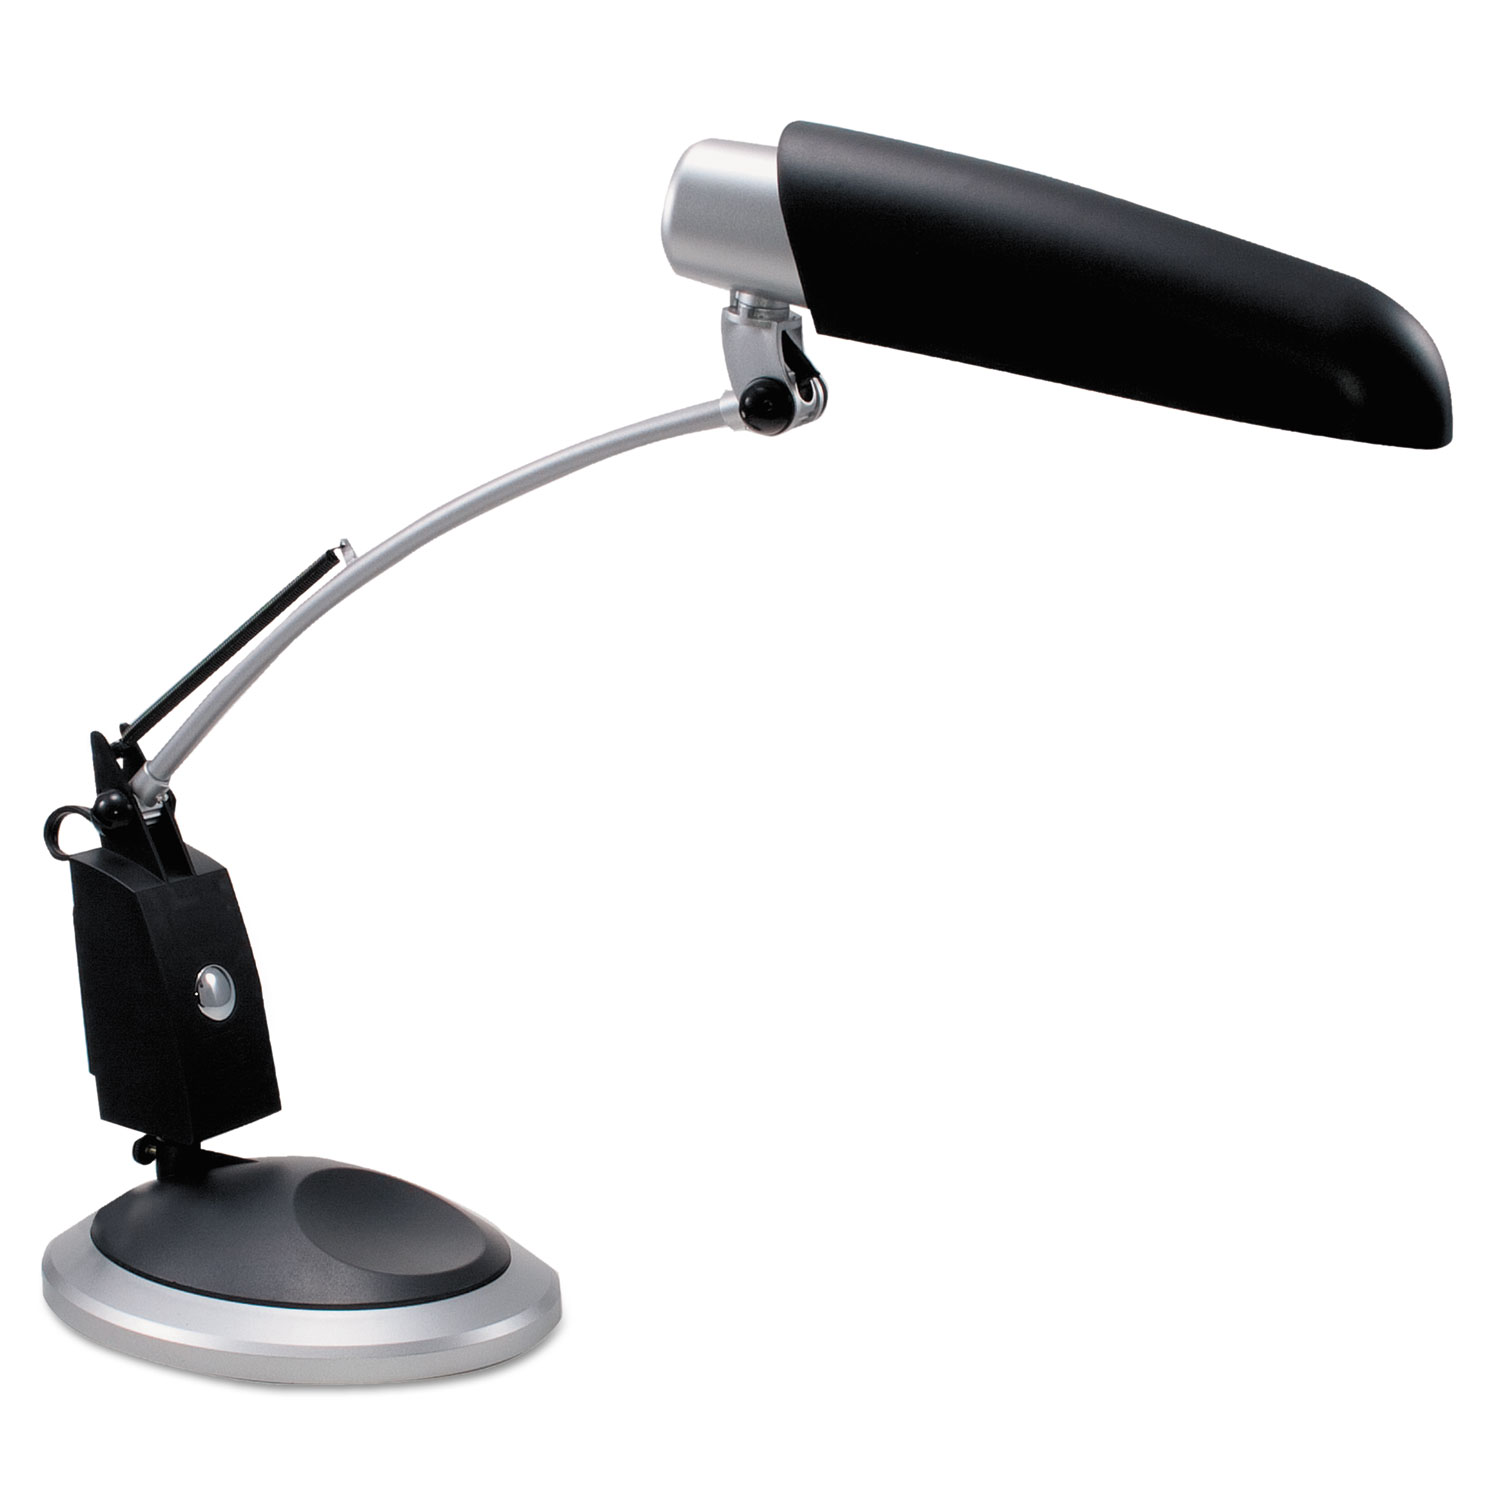 Full Spectrum 13W Desk Lamp, Spring Balance Arm w/14 Reach, Black/Silver